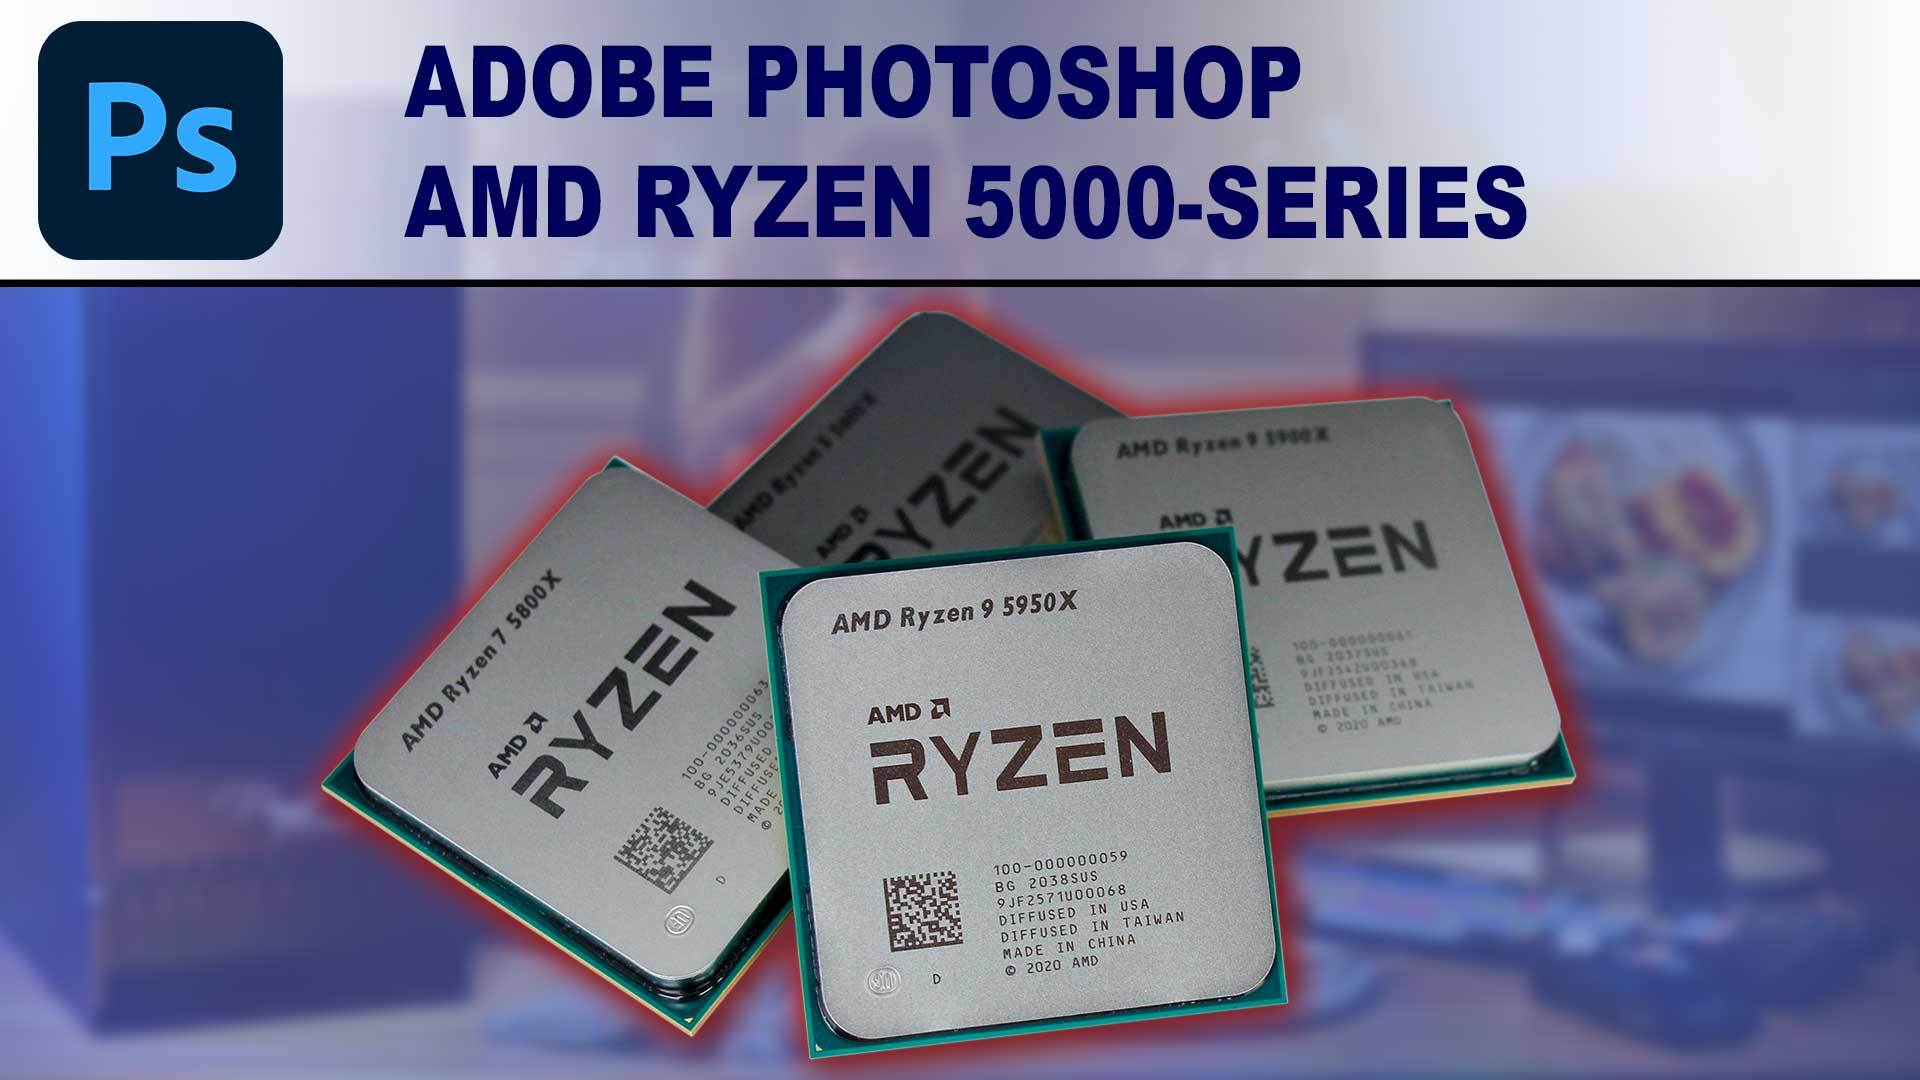 AMD Ryzen 5000-series for Adobe Photoshop